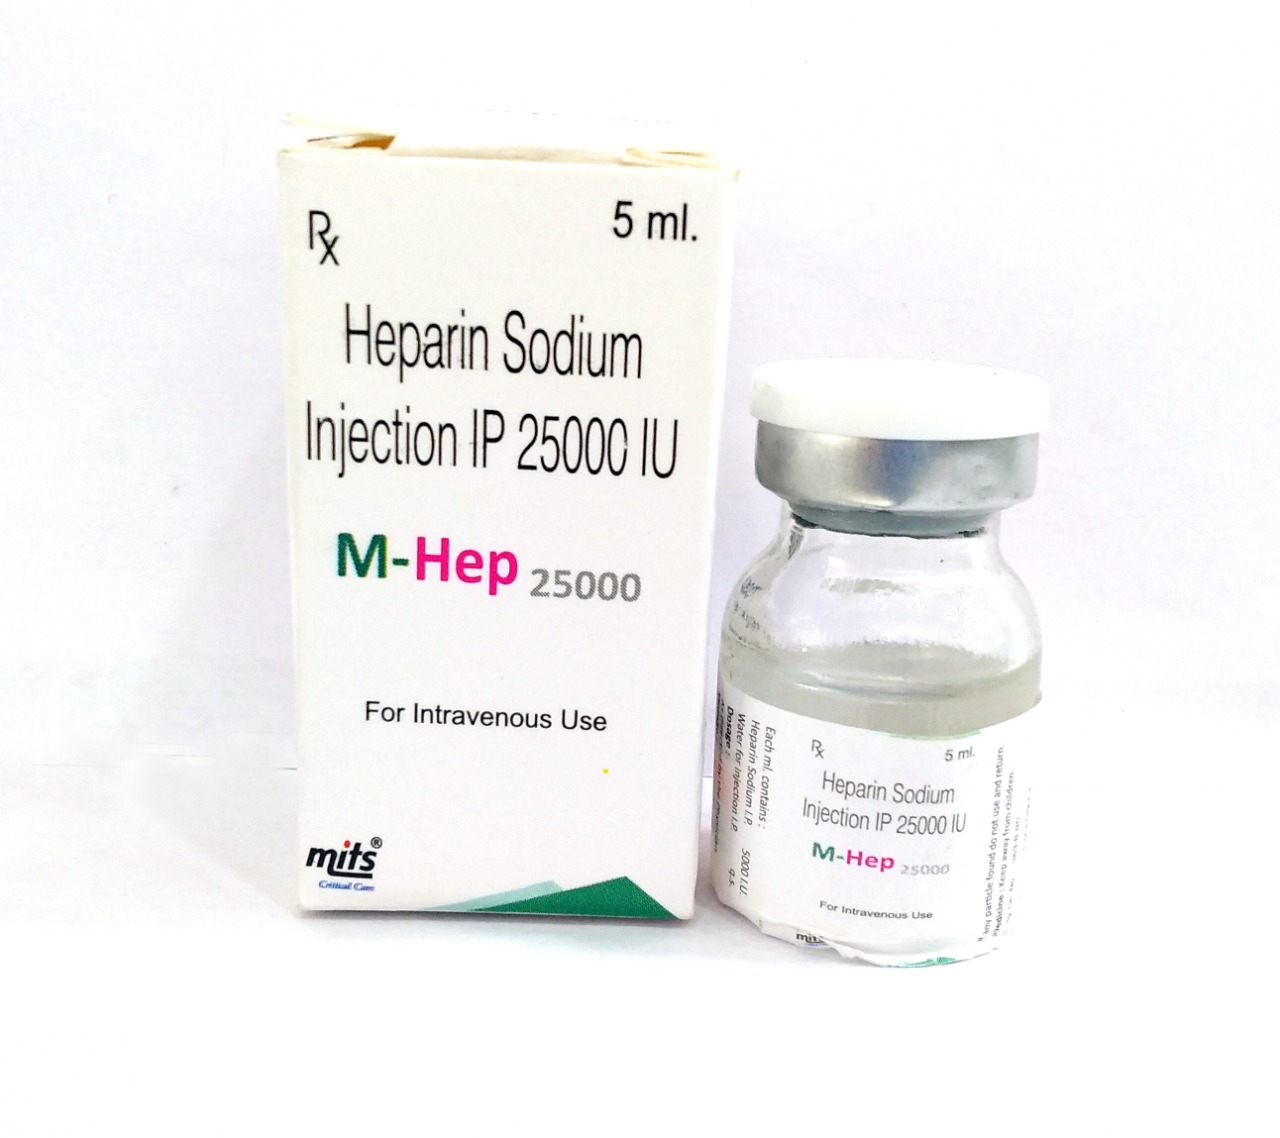 M-HEP 25000 Injection